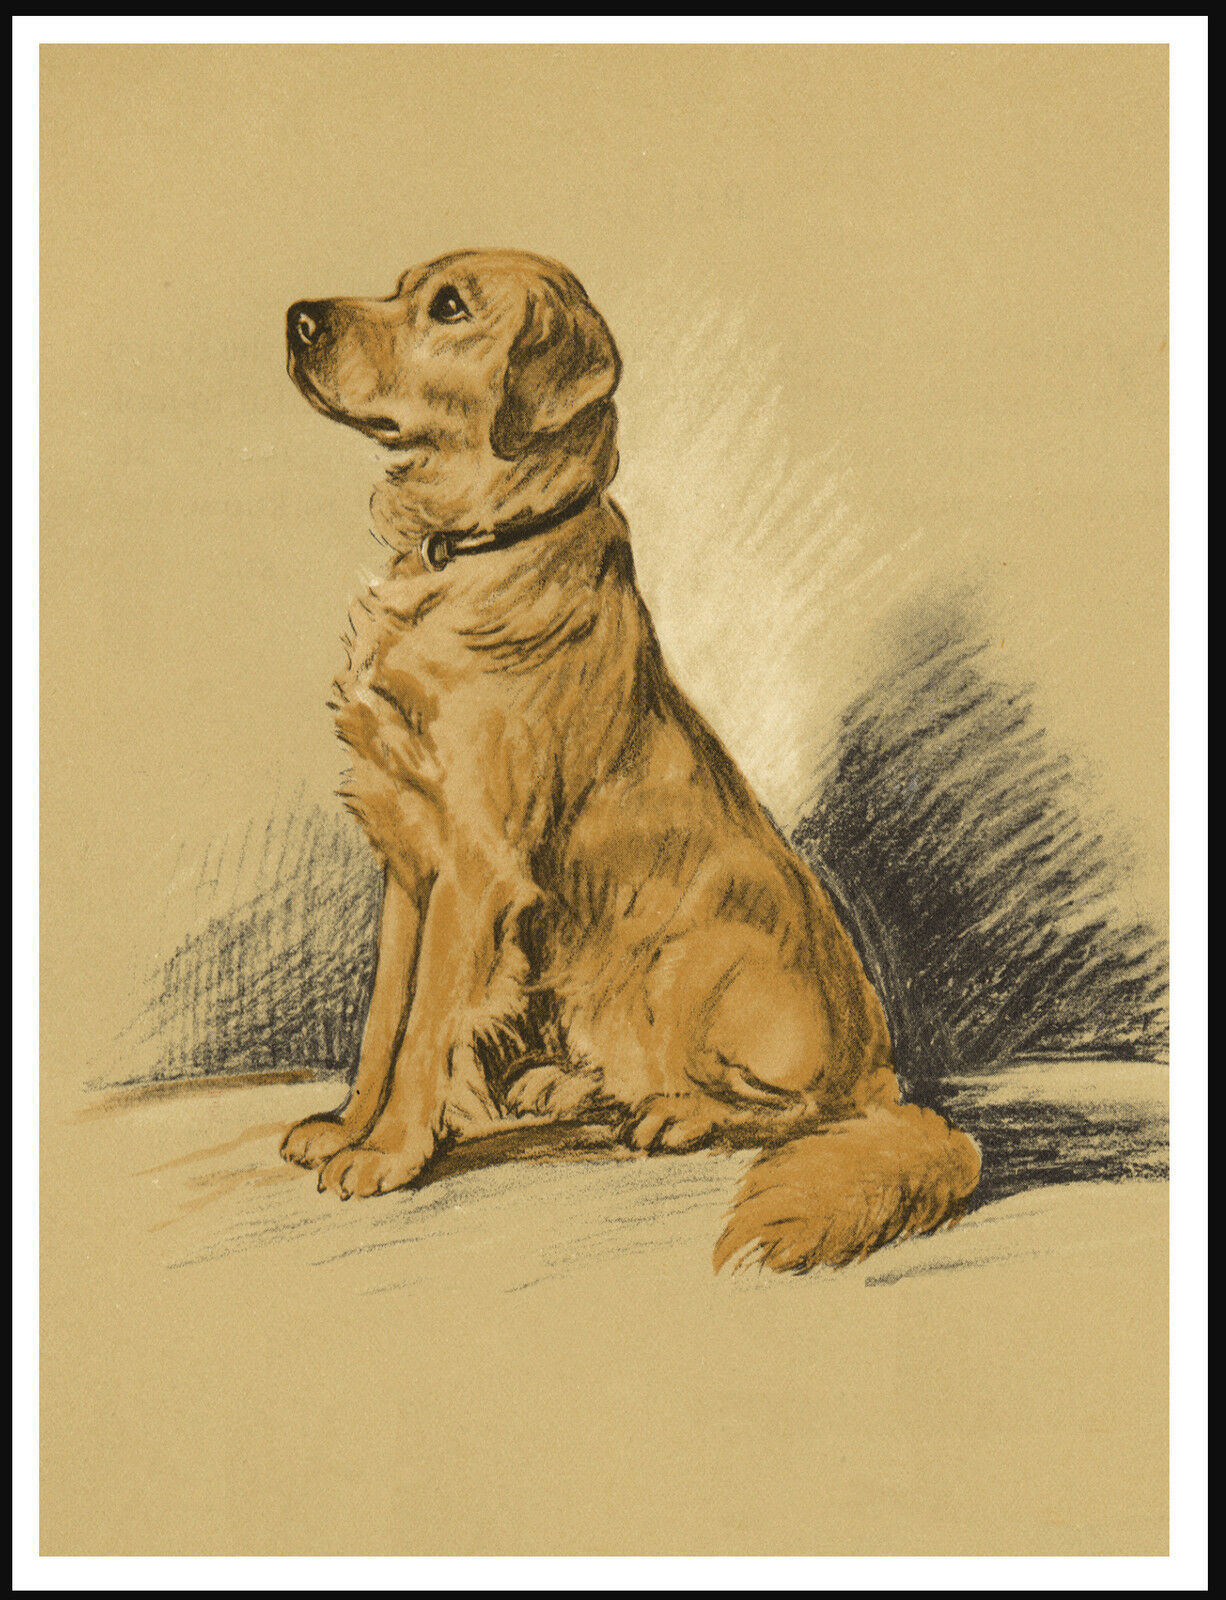 GOLDEN RETRIEVER SEATED DOG LOVELY IMAGE VINTAGE STYLE DOG ART PRINT POSTER